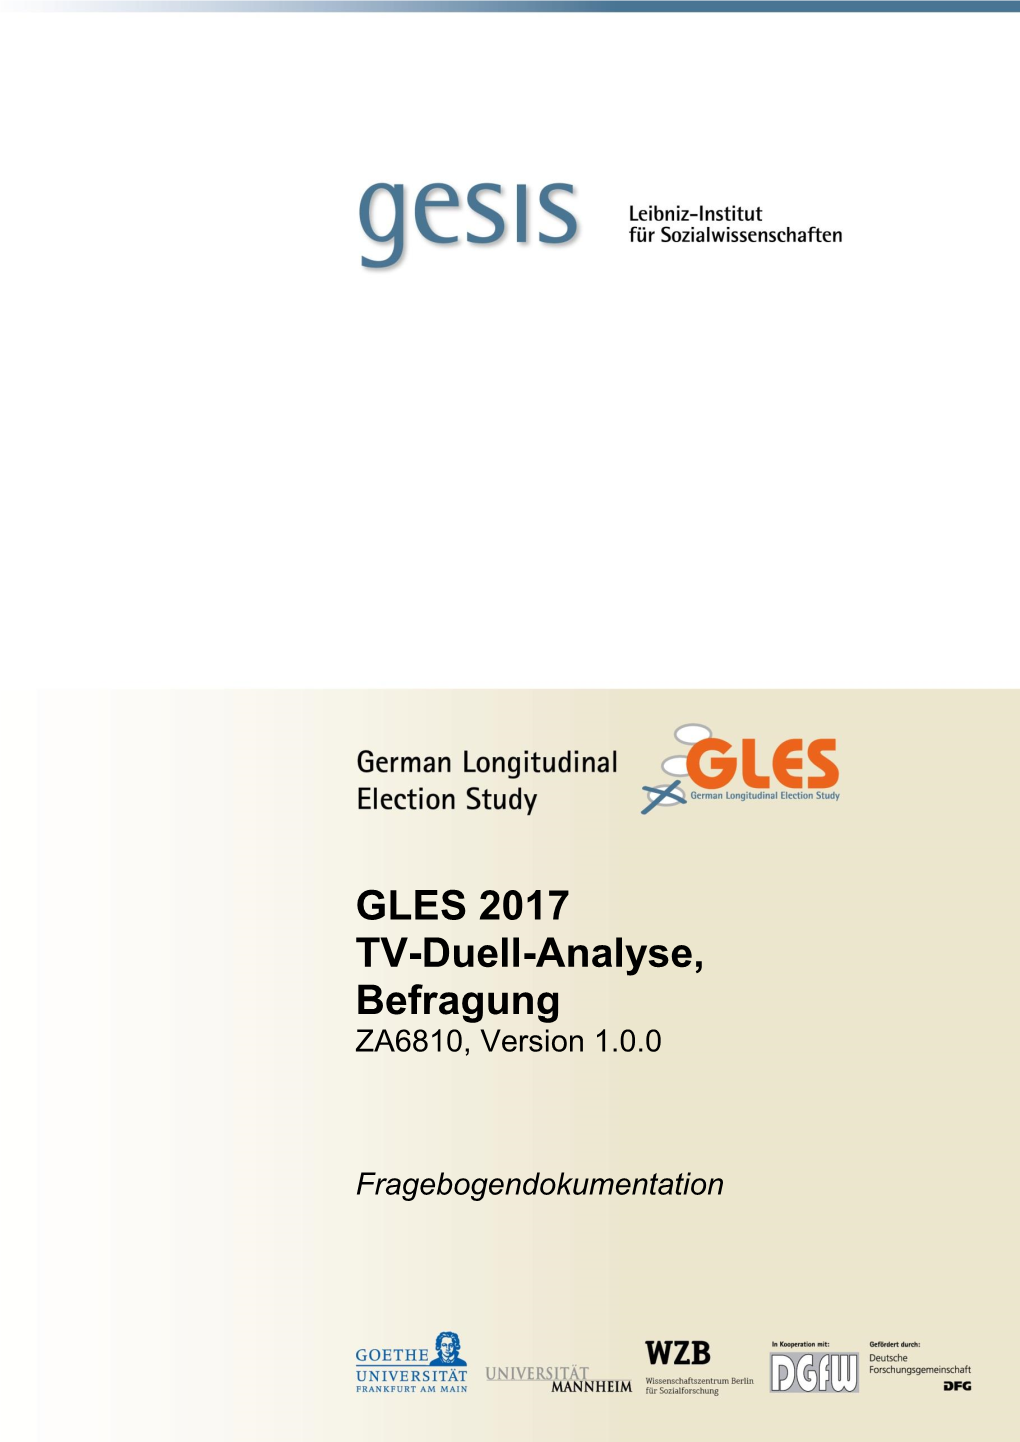 GLES 2017 TV-Duell-Analyse, Befragung ZA6810, Version 1.0.0